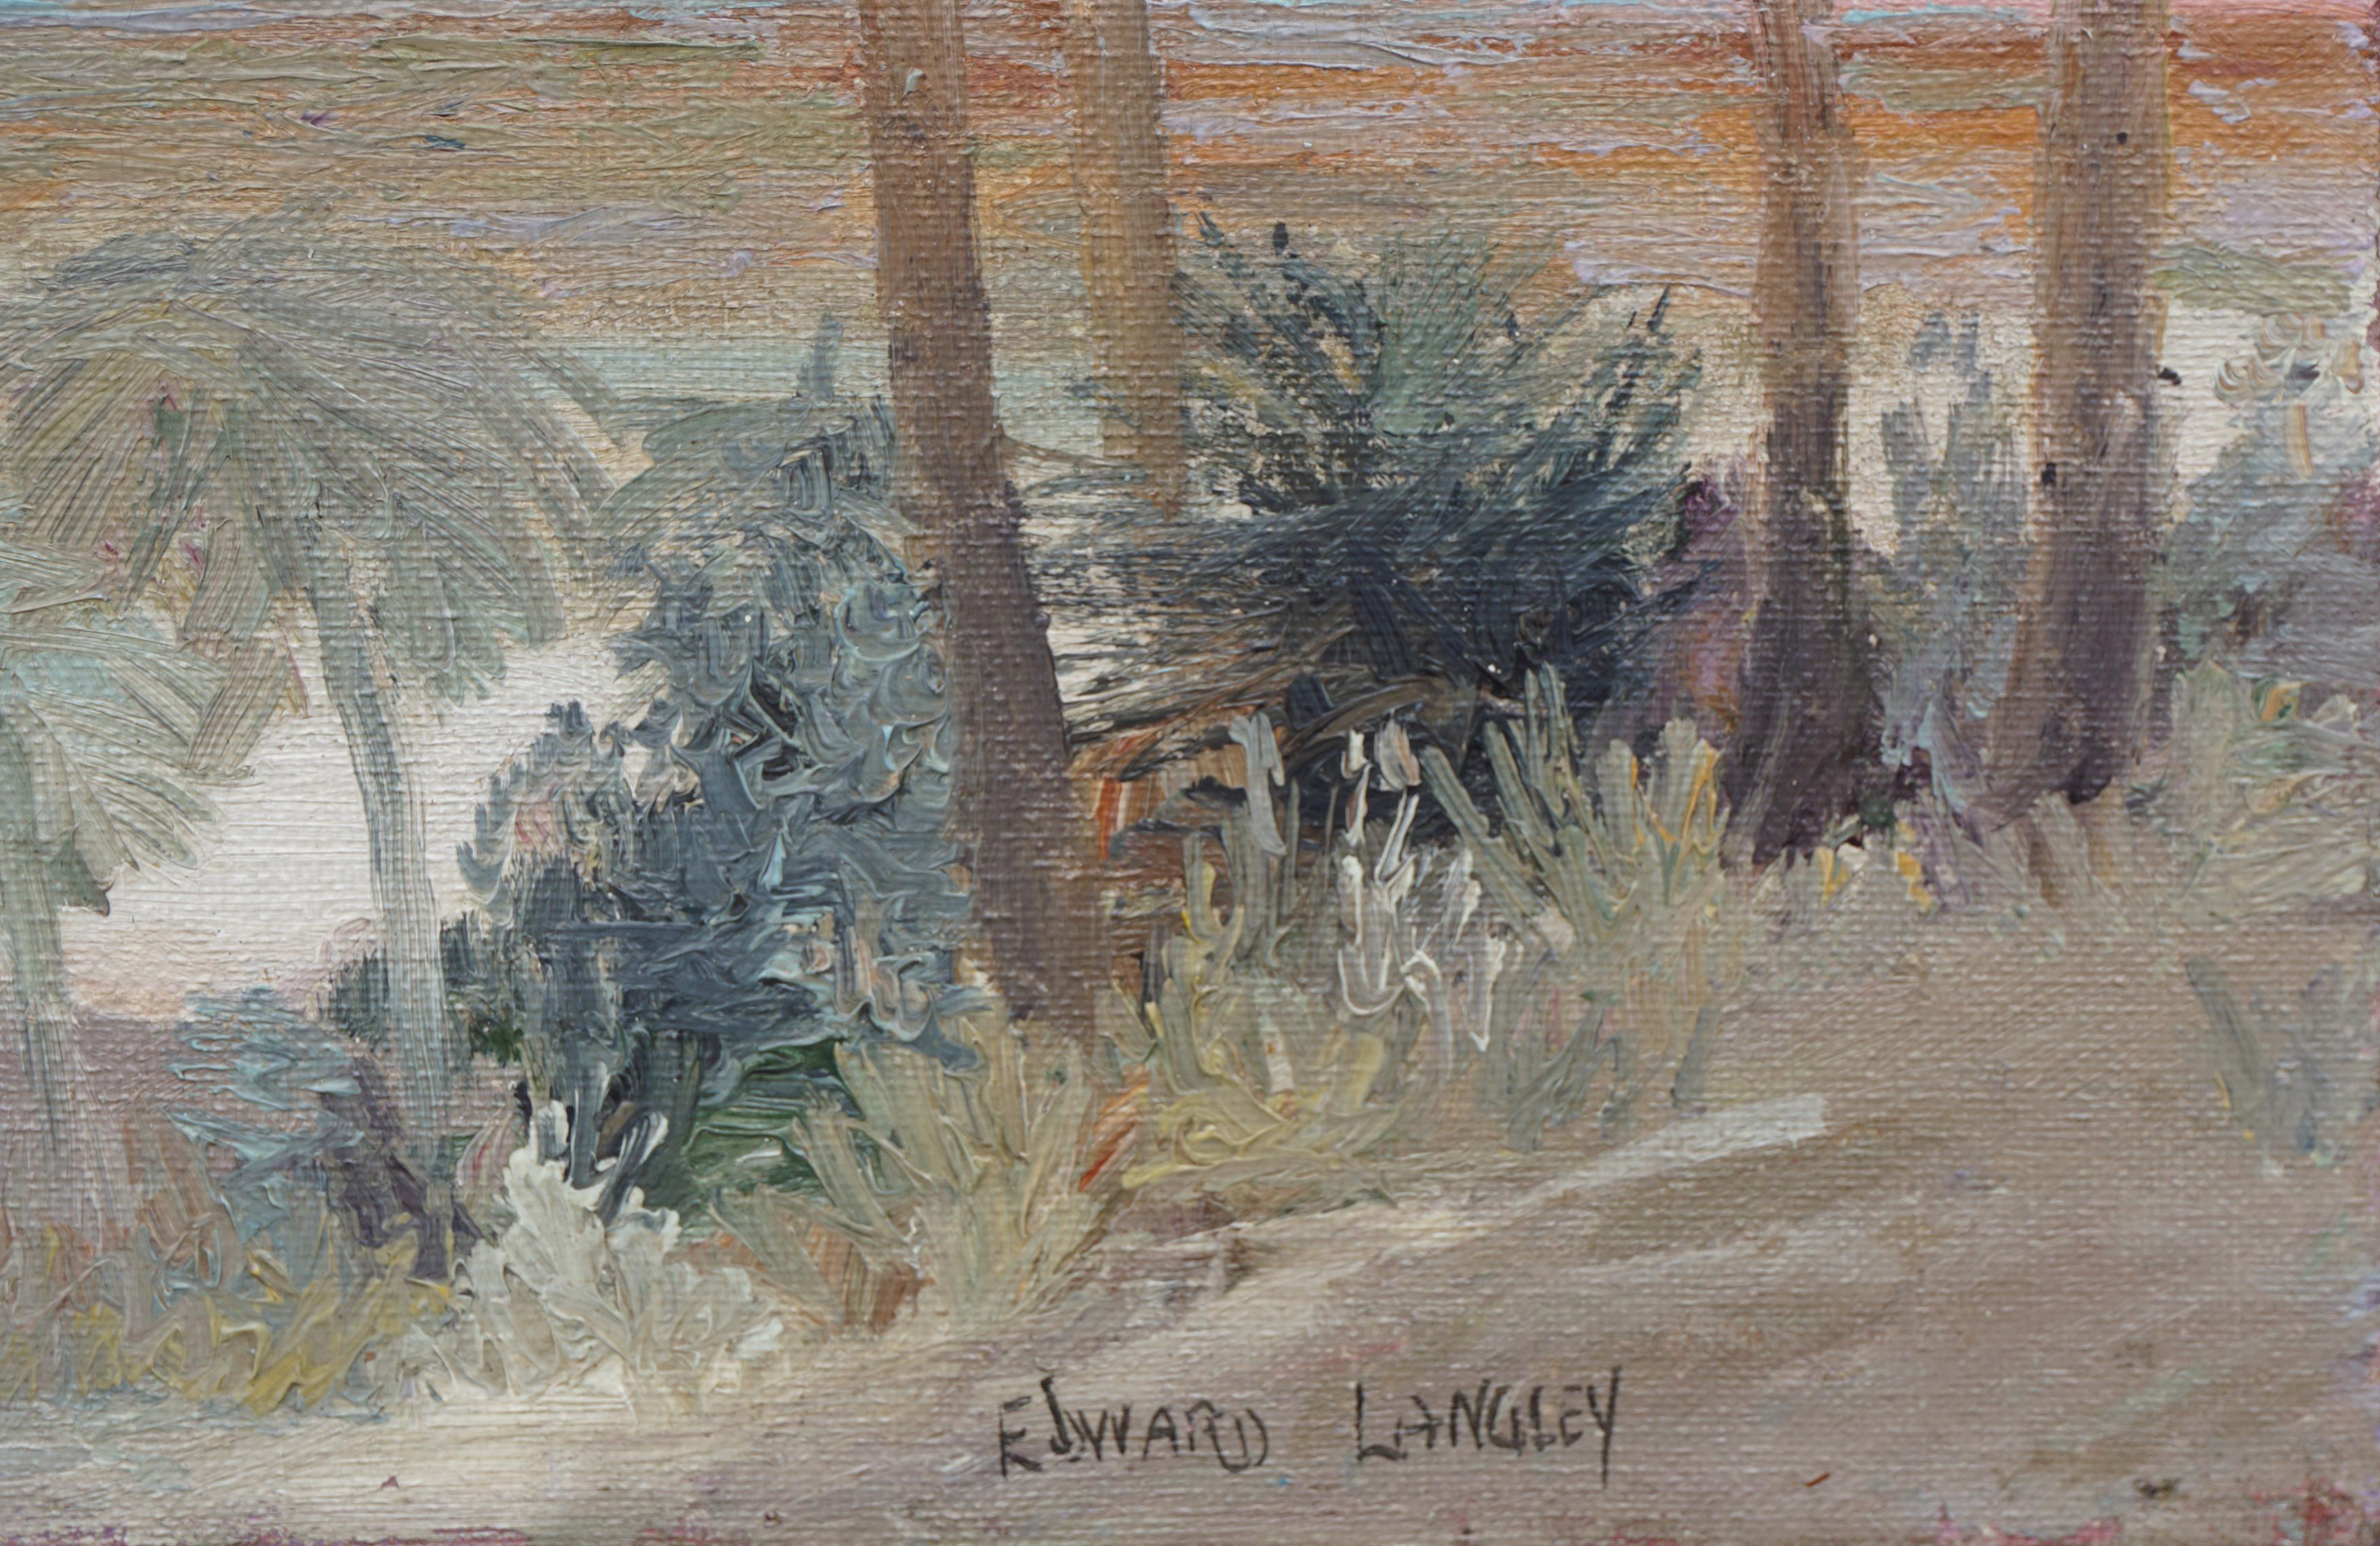 edward langley artist